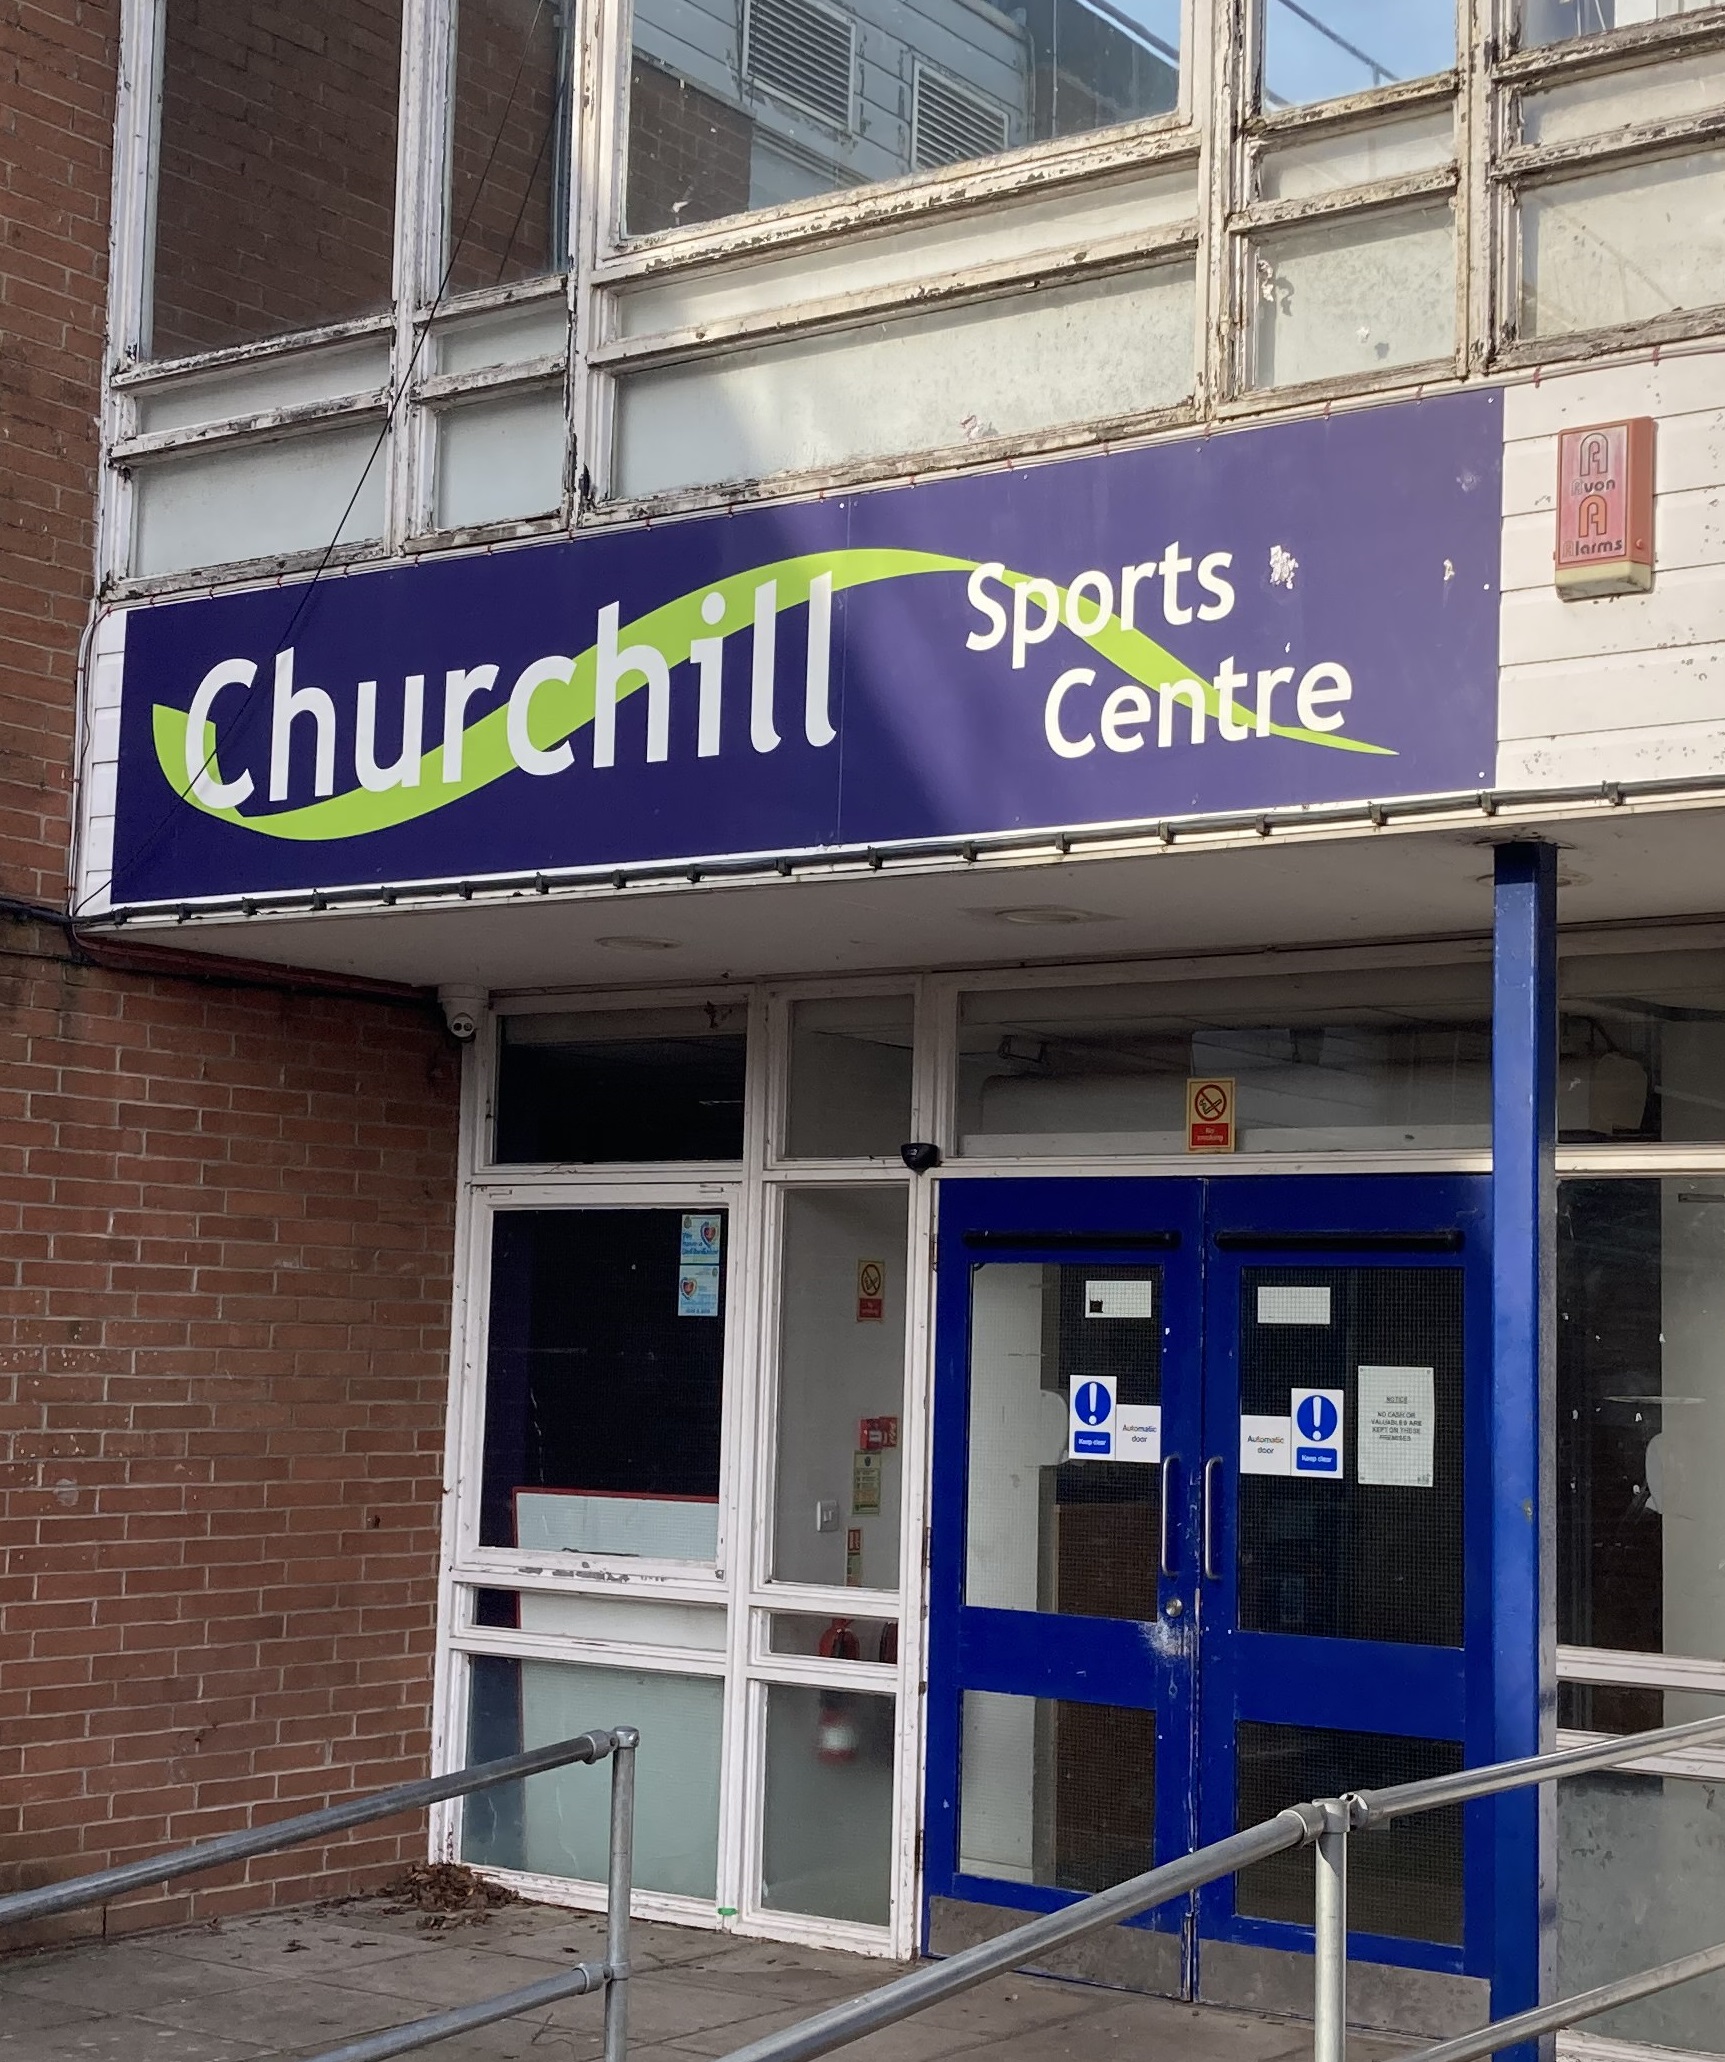 Future of Churchill Sports Centre building secured 